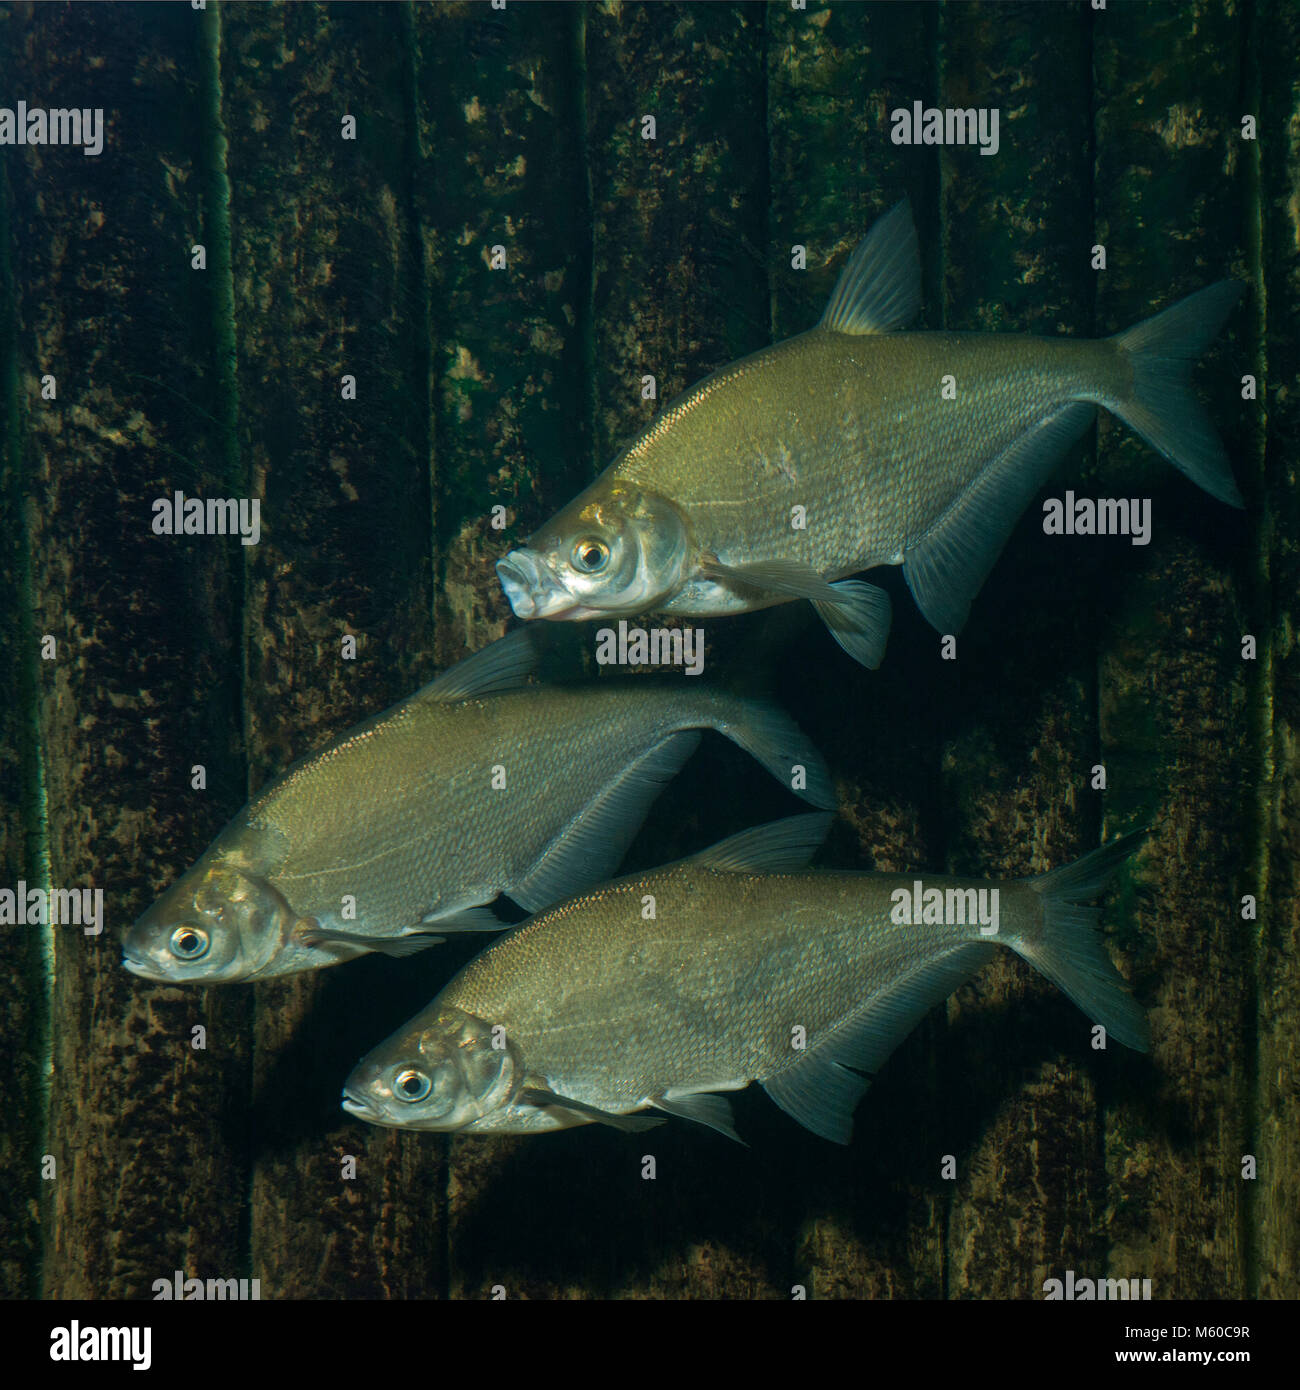 Zope (Abramis ballerus). Three adults under water. Germany Stock Photo